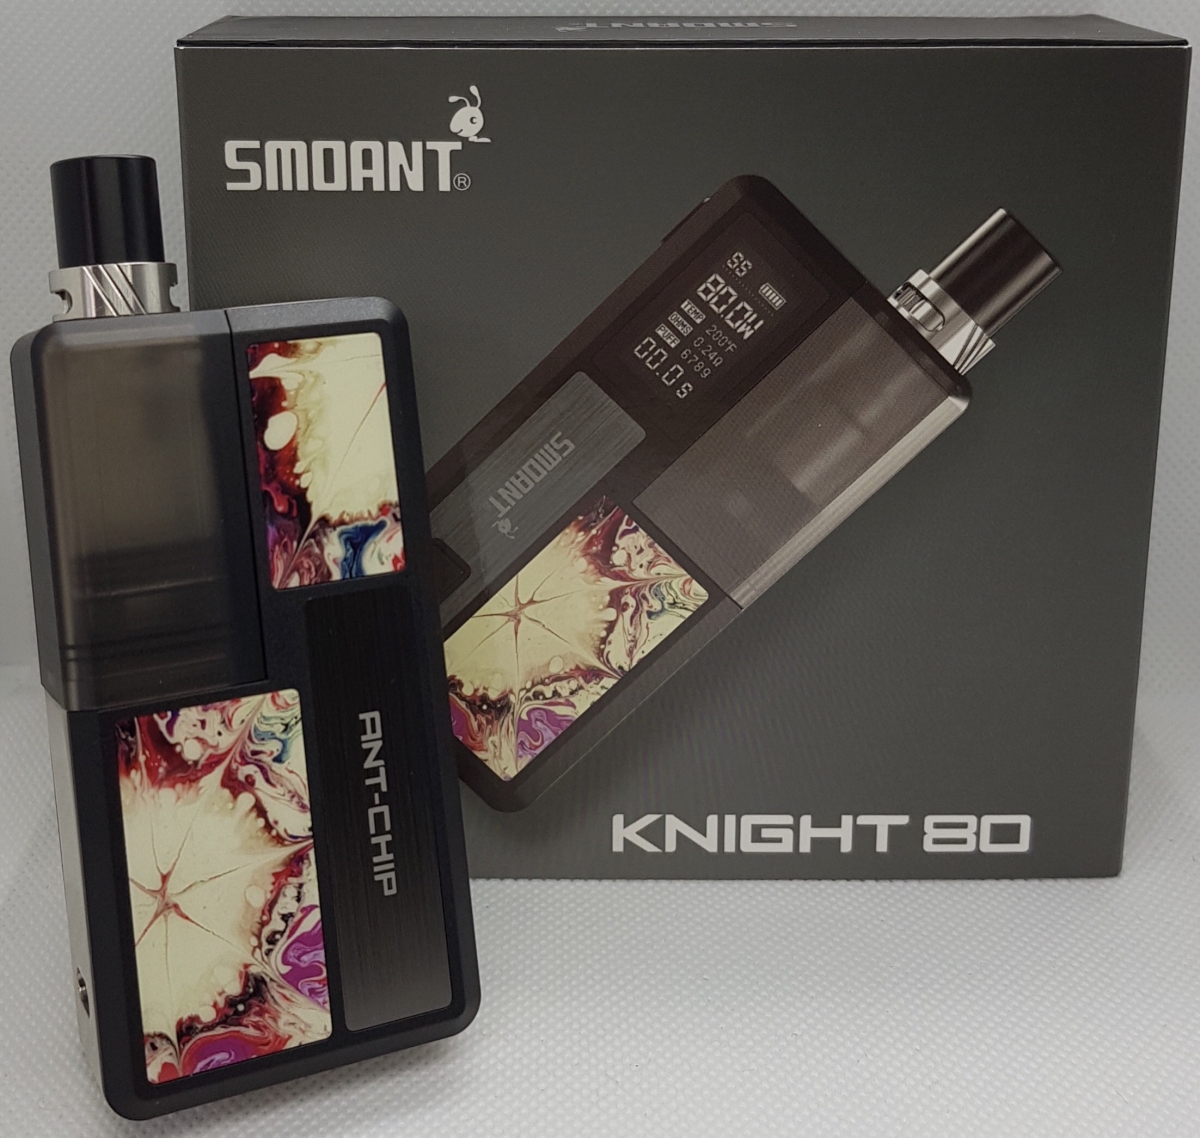 Smoant Knight 80 Kit in full glory